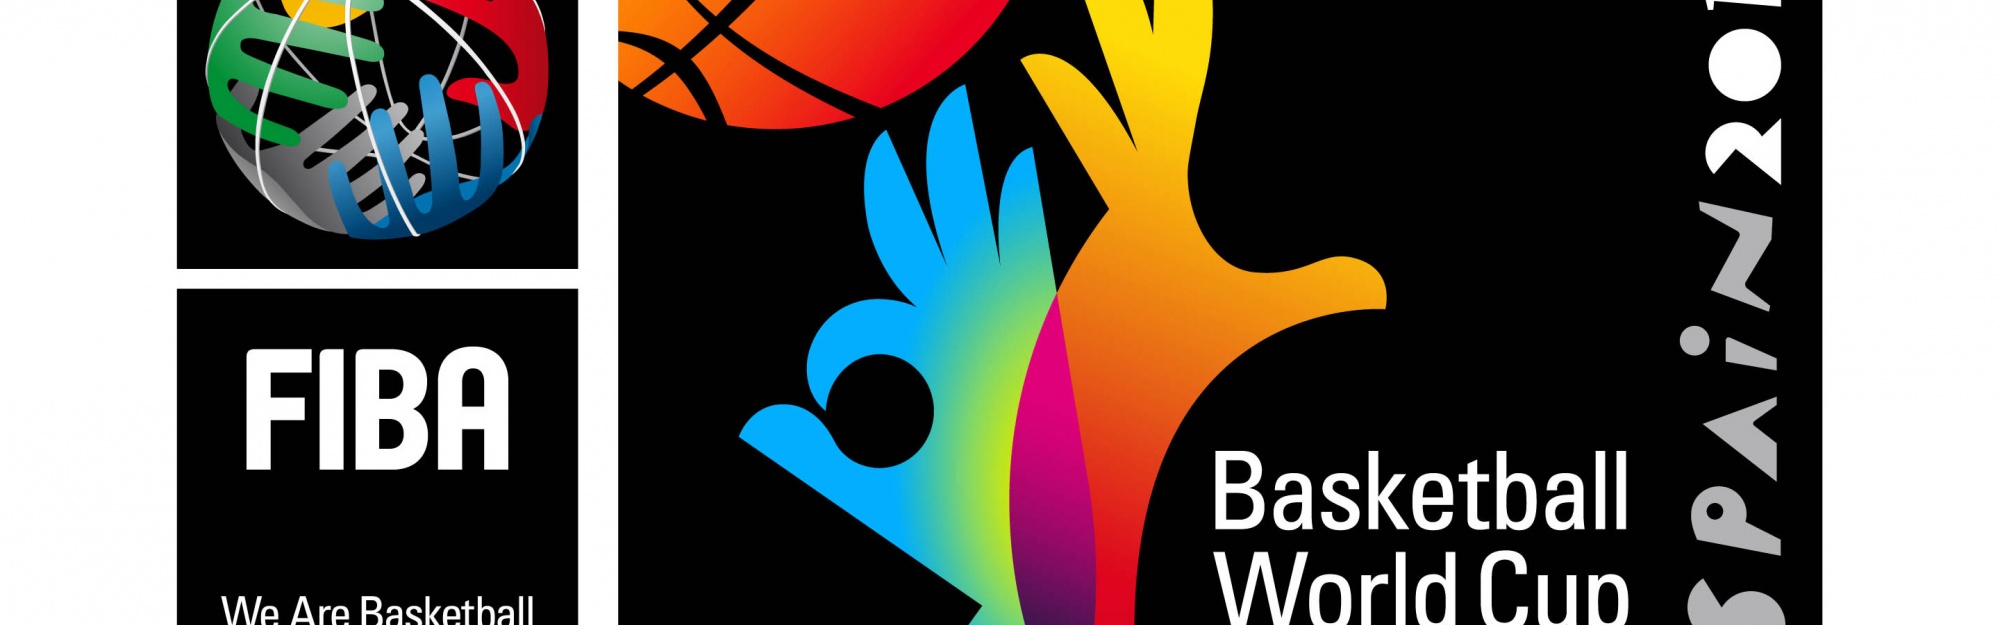 2014 FIBA Basketball WC Logo